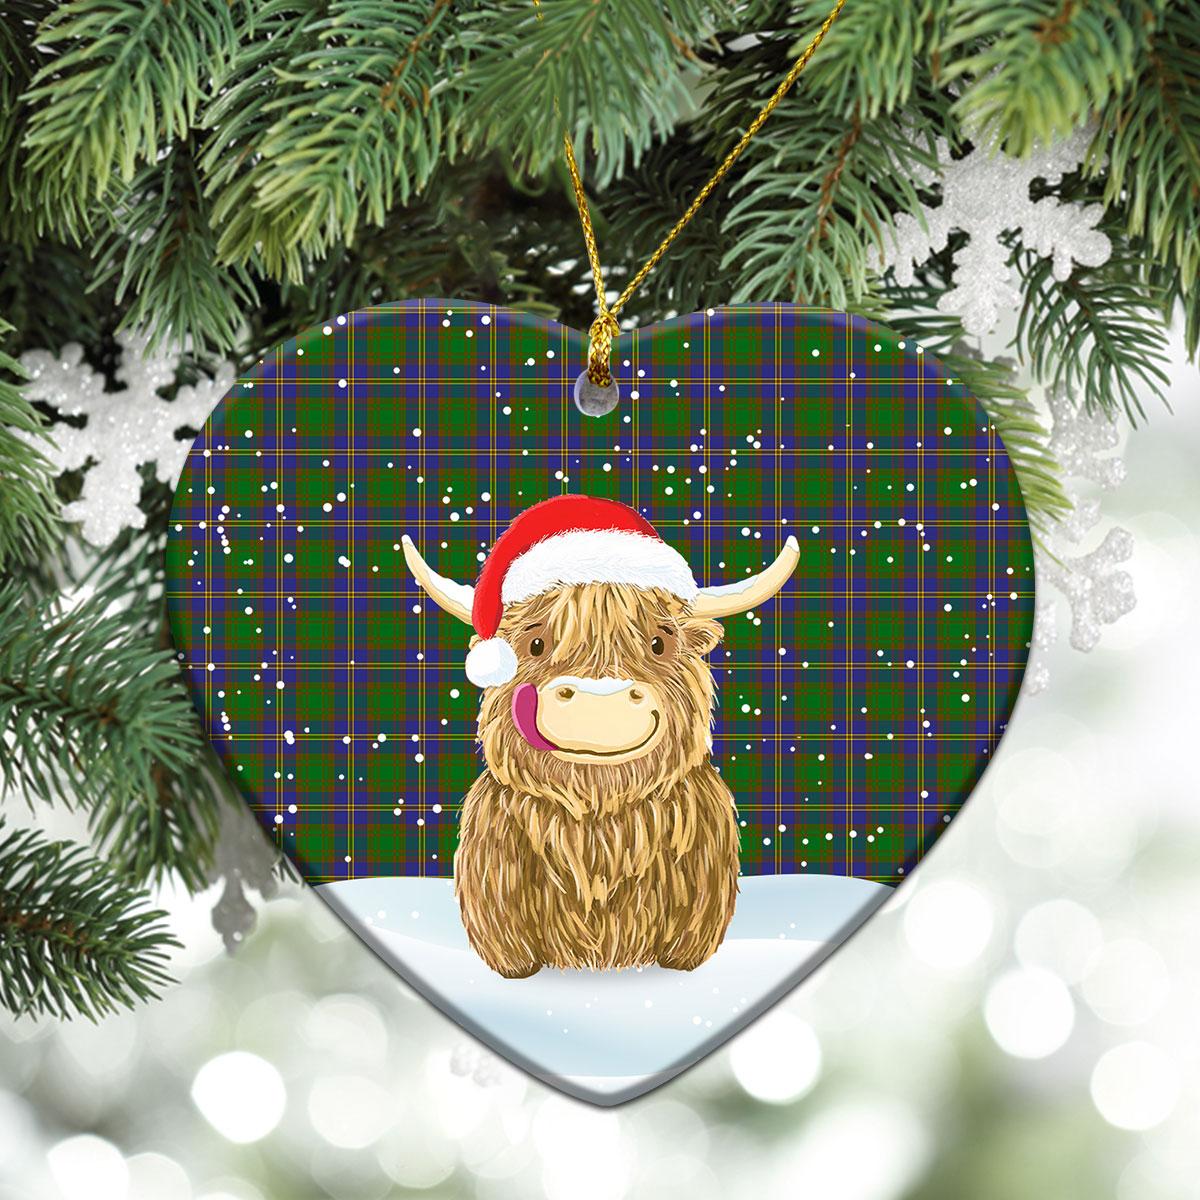 Strang (or Strange) Tartan Christmas Ceramic Ornament - Highland Cows Style